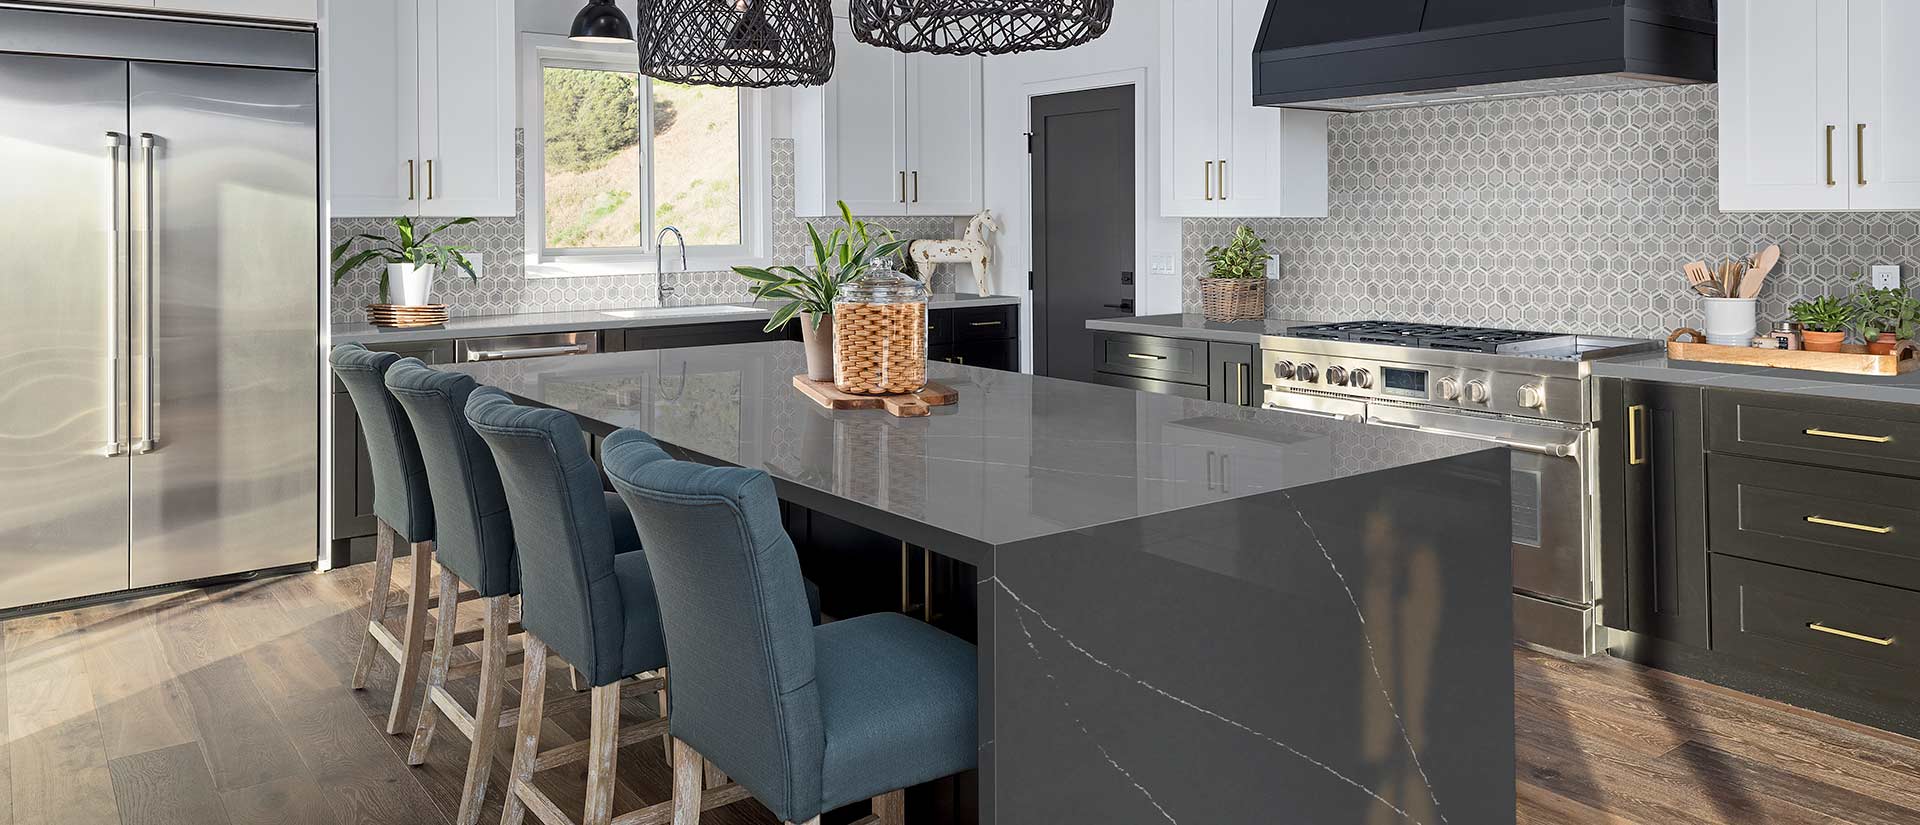 Soapstone Metropolis Quartz countertop in a stylish and modern kitchen